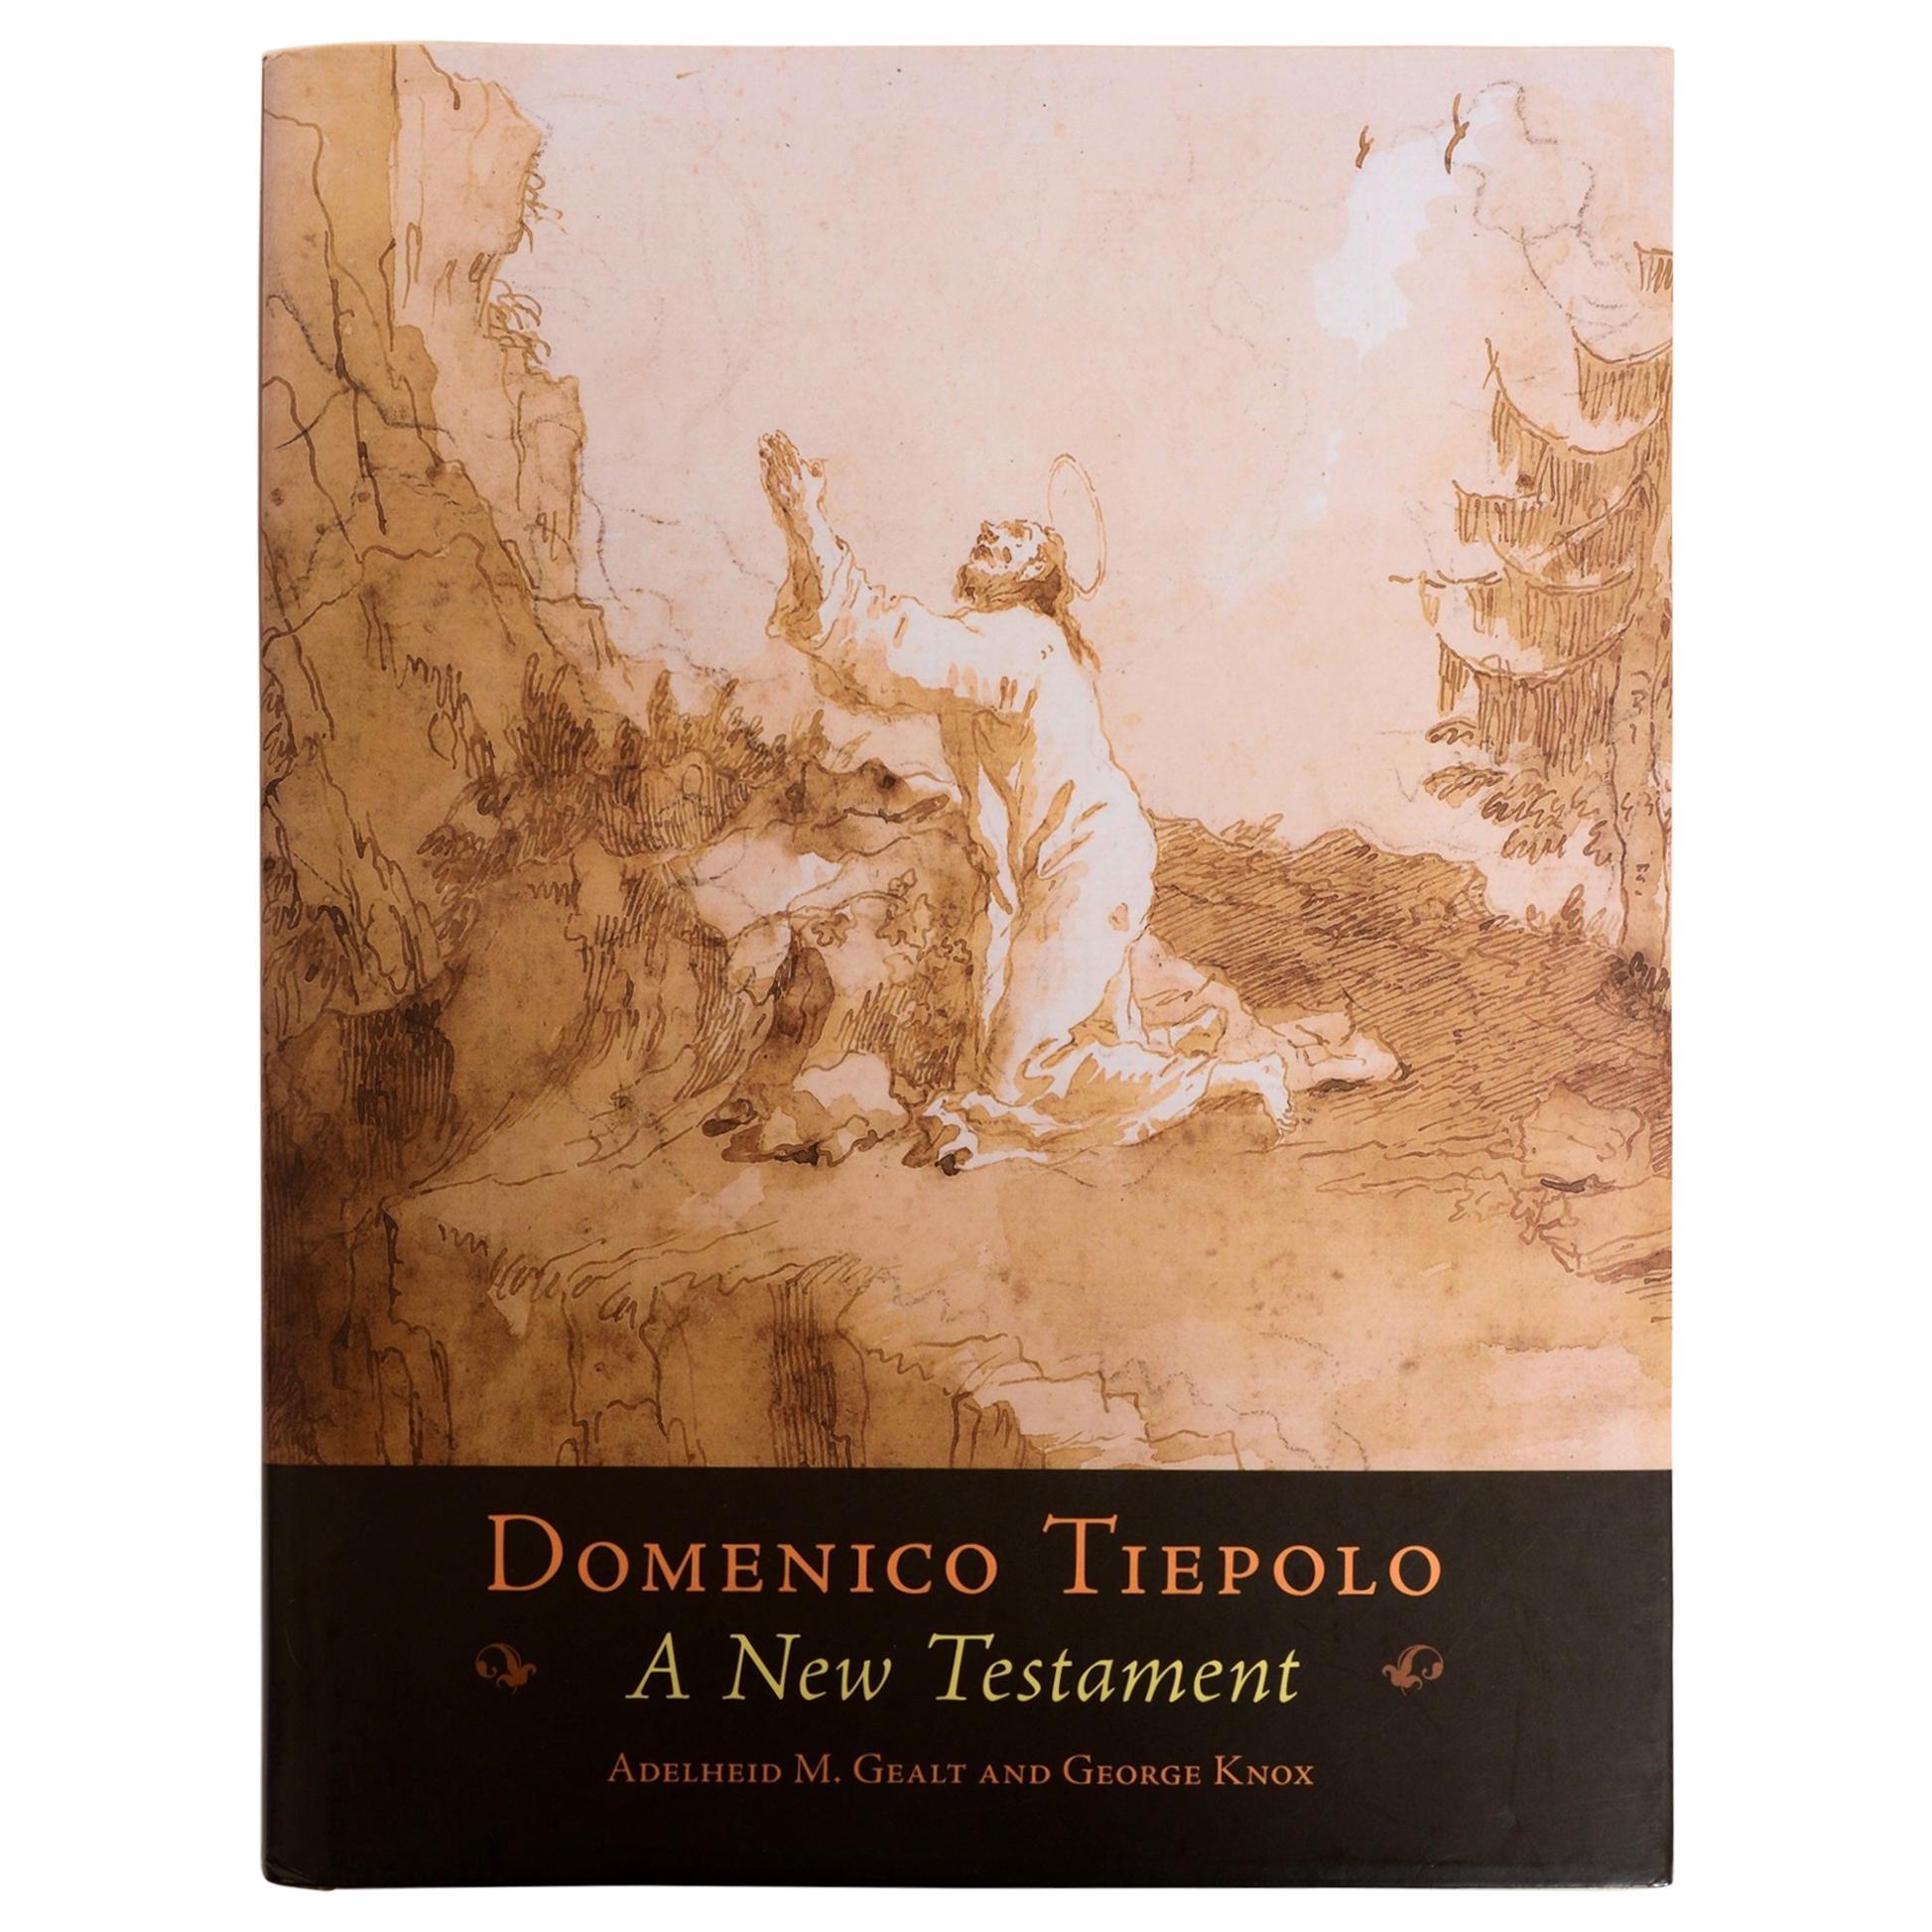 Domenico Tiepolo A New Testament by Adelheid M Gealt and George Knox